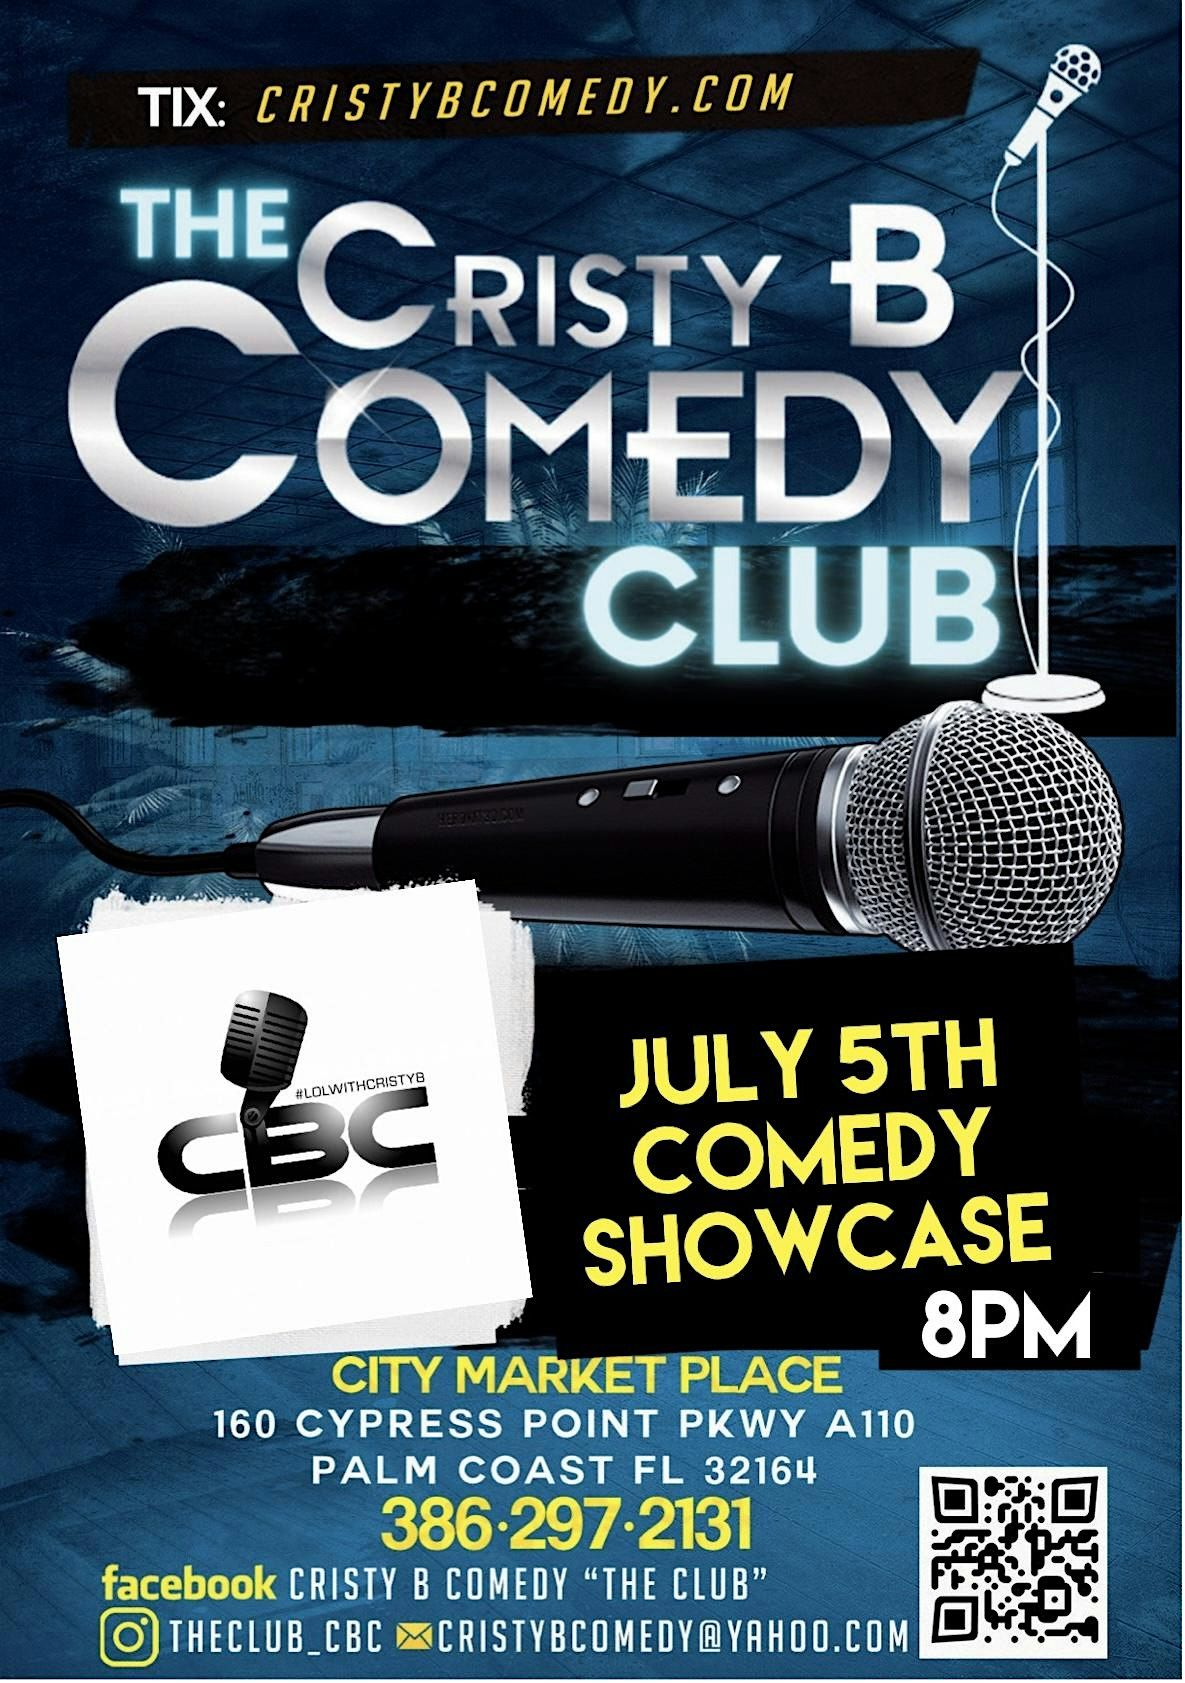 July 5th Comedy Showcase